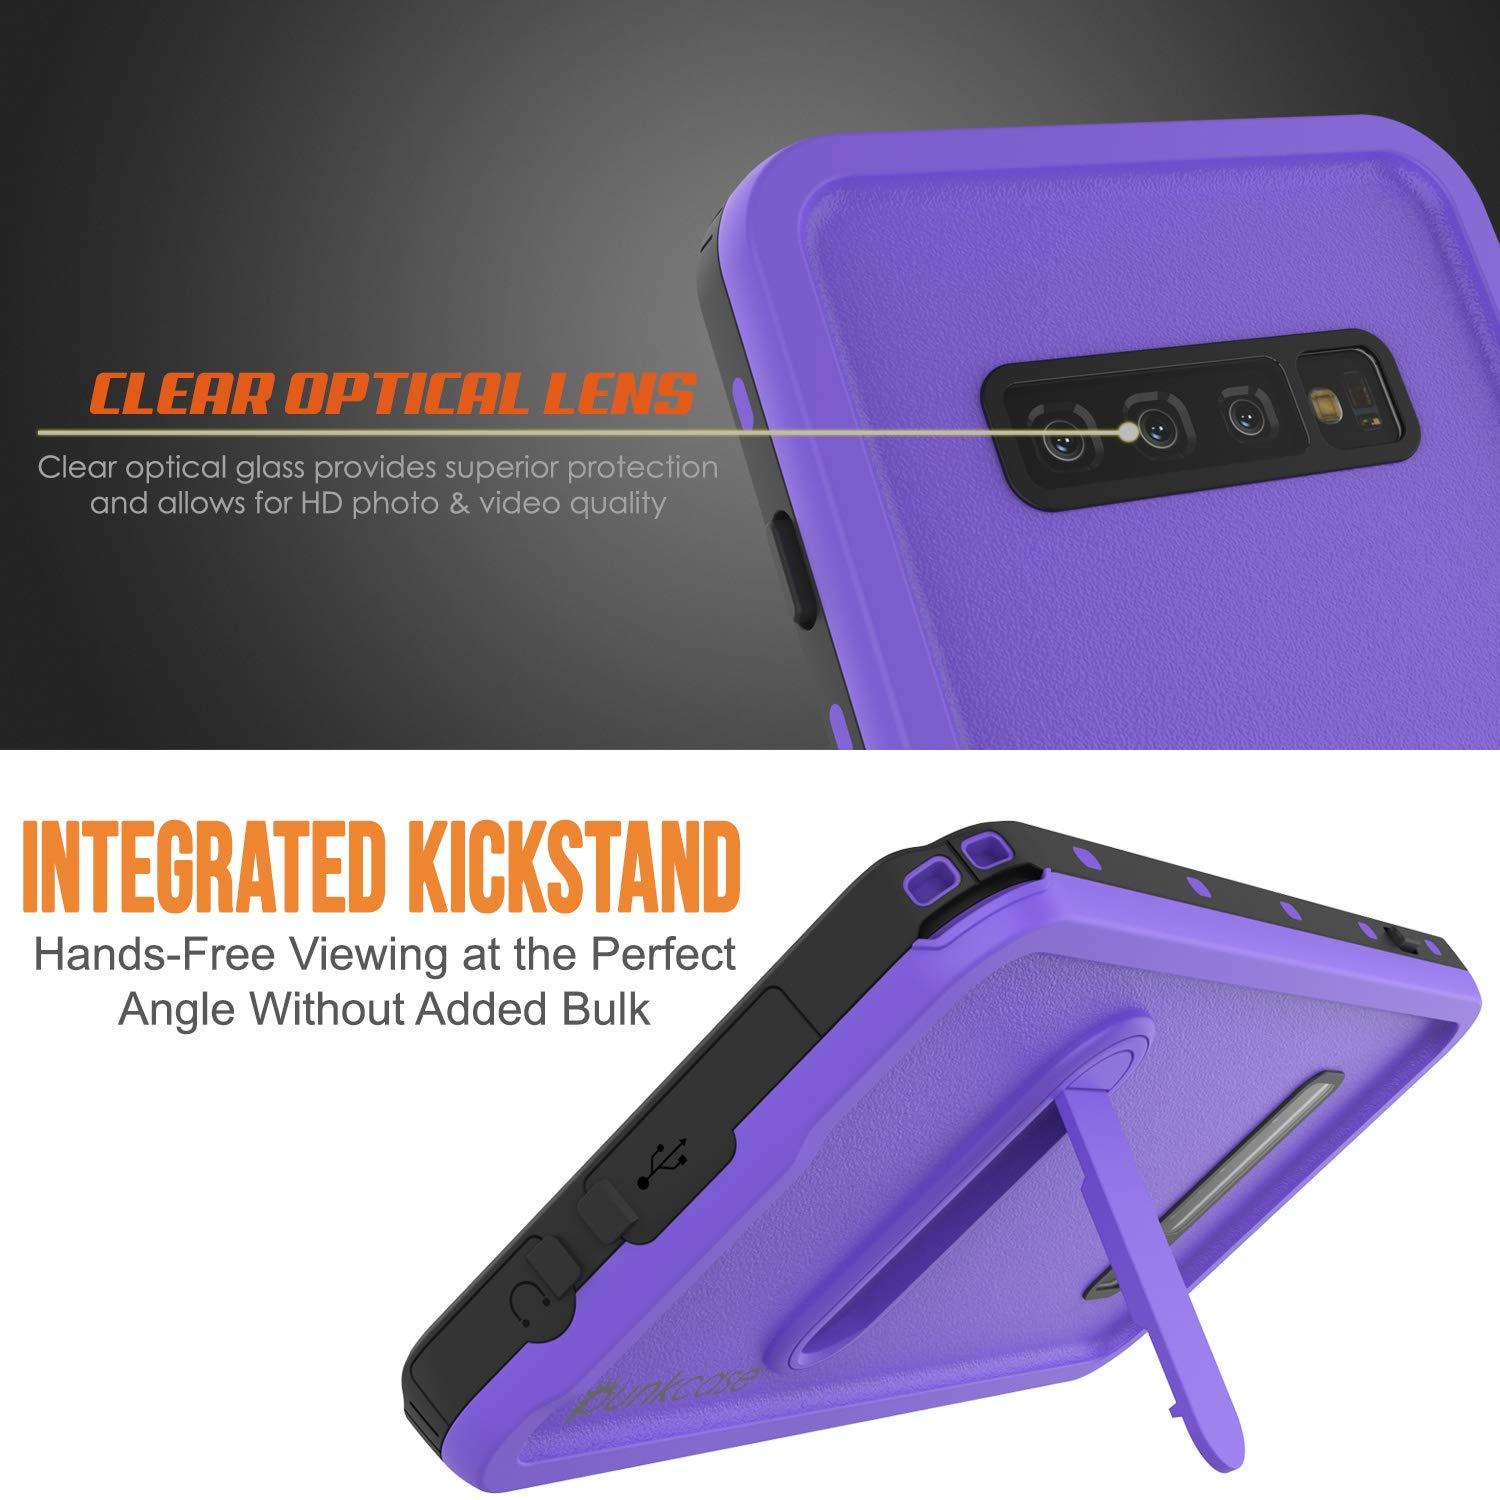 Galaxy S10+ Plus Waterproof Case, Punkcase [KickStud Series] Armor Cover [Purple]